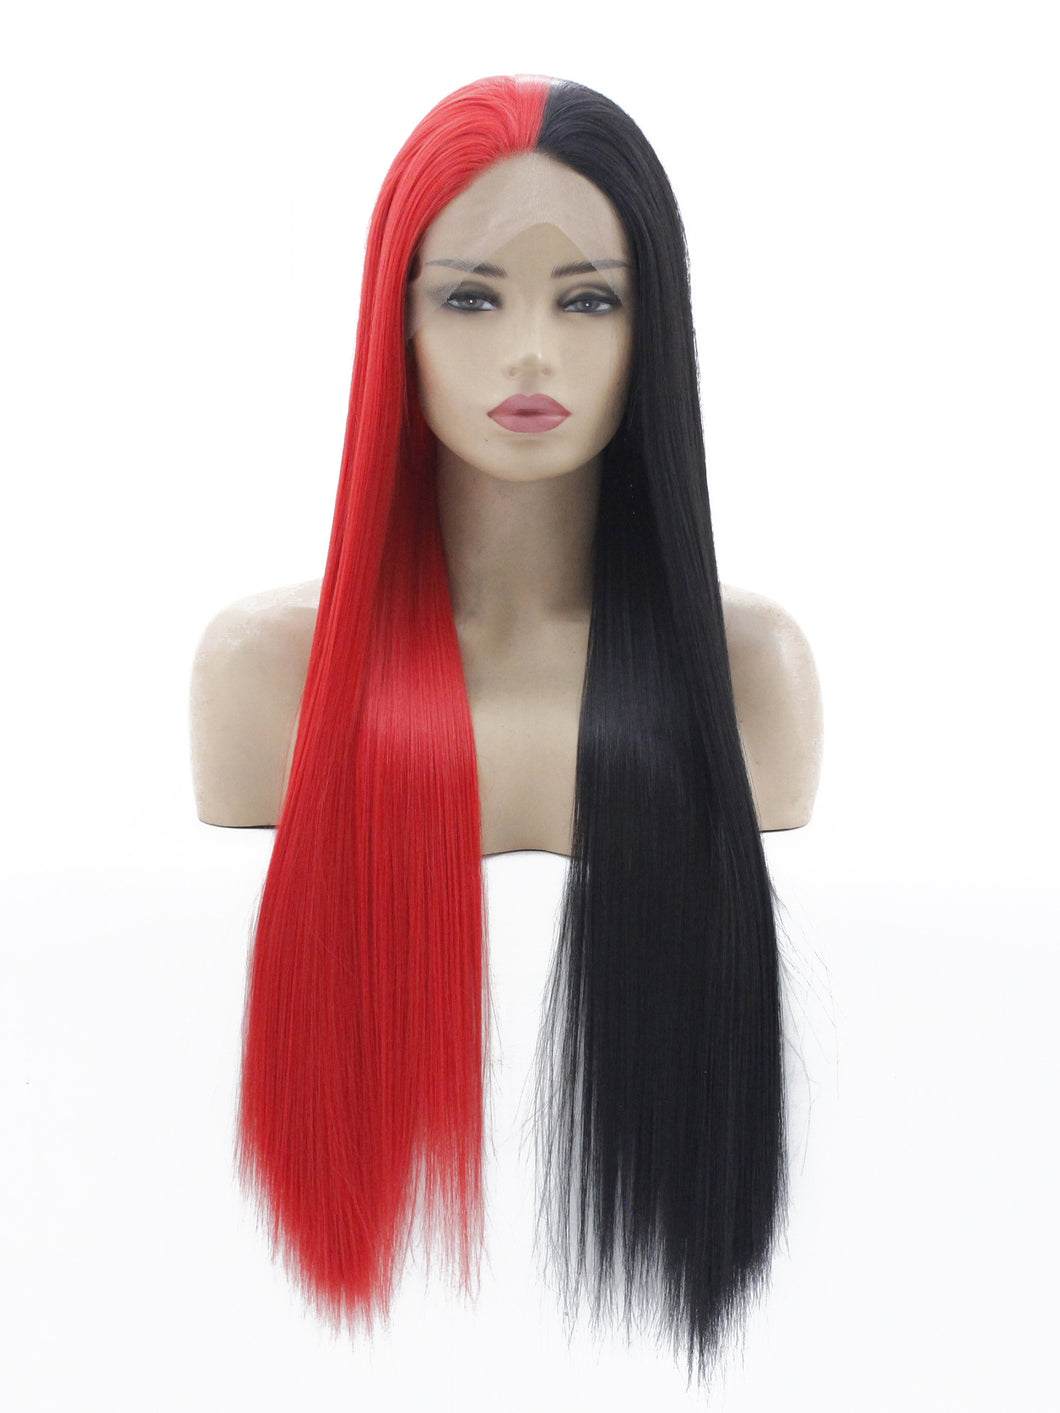 Half Red Half Black Lace Front Wig 621